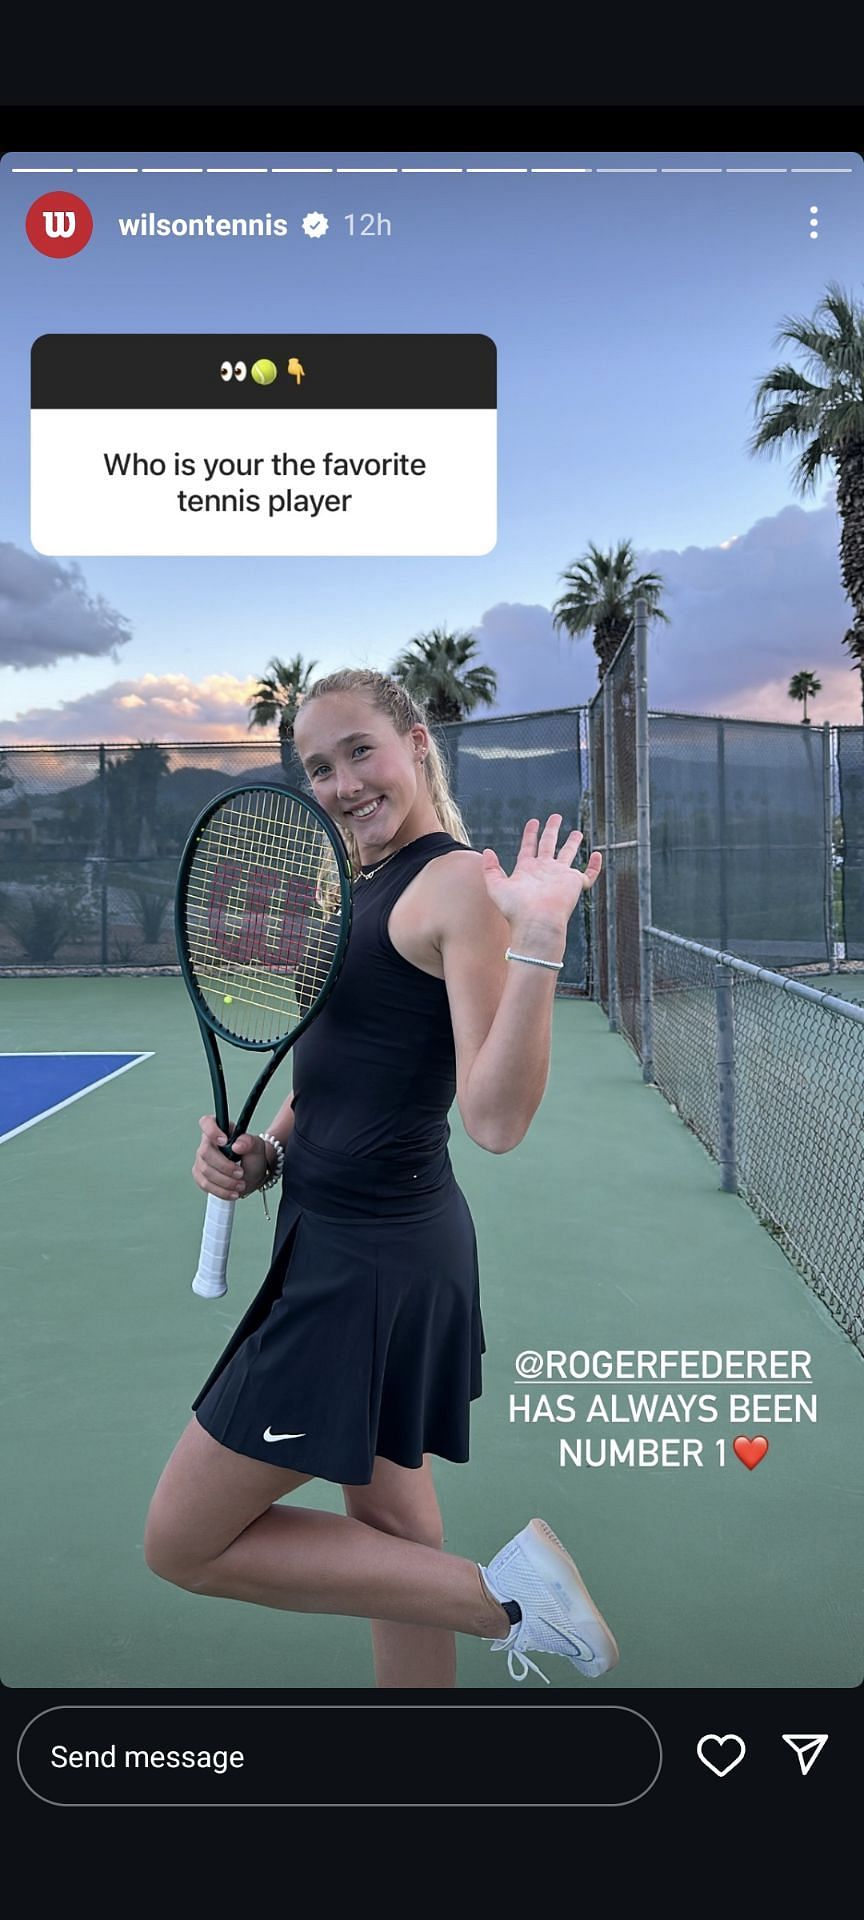 Mirra Andreeva names Roger Federer as her favorite tennis player in an Instagram post